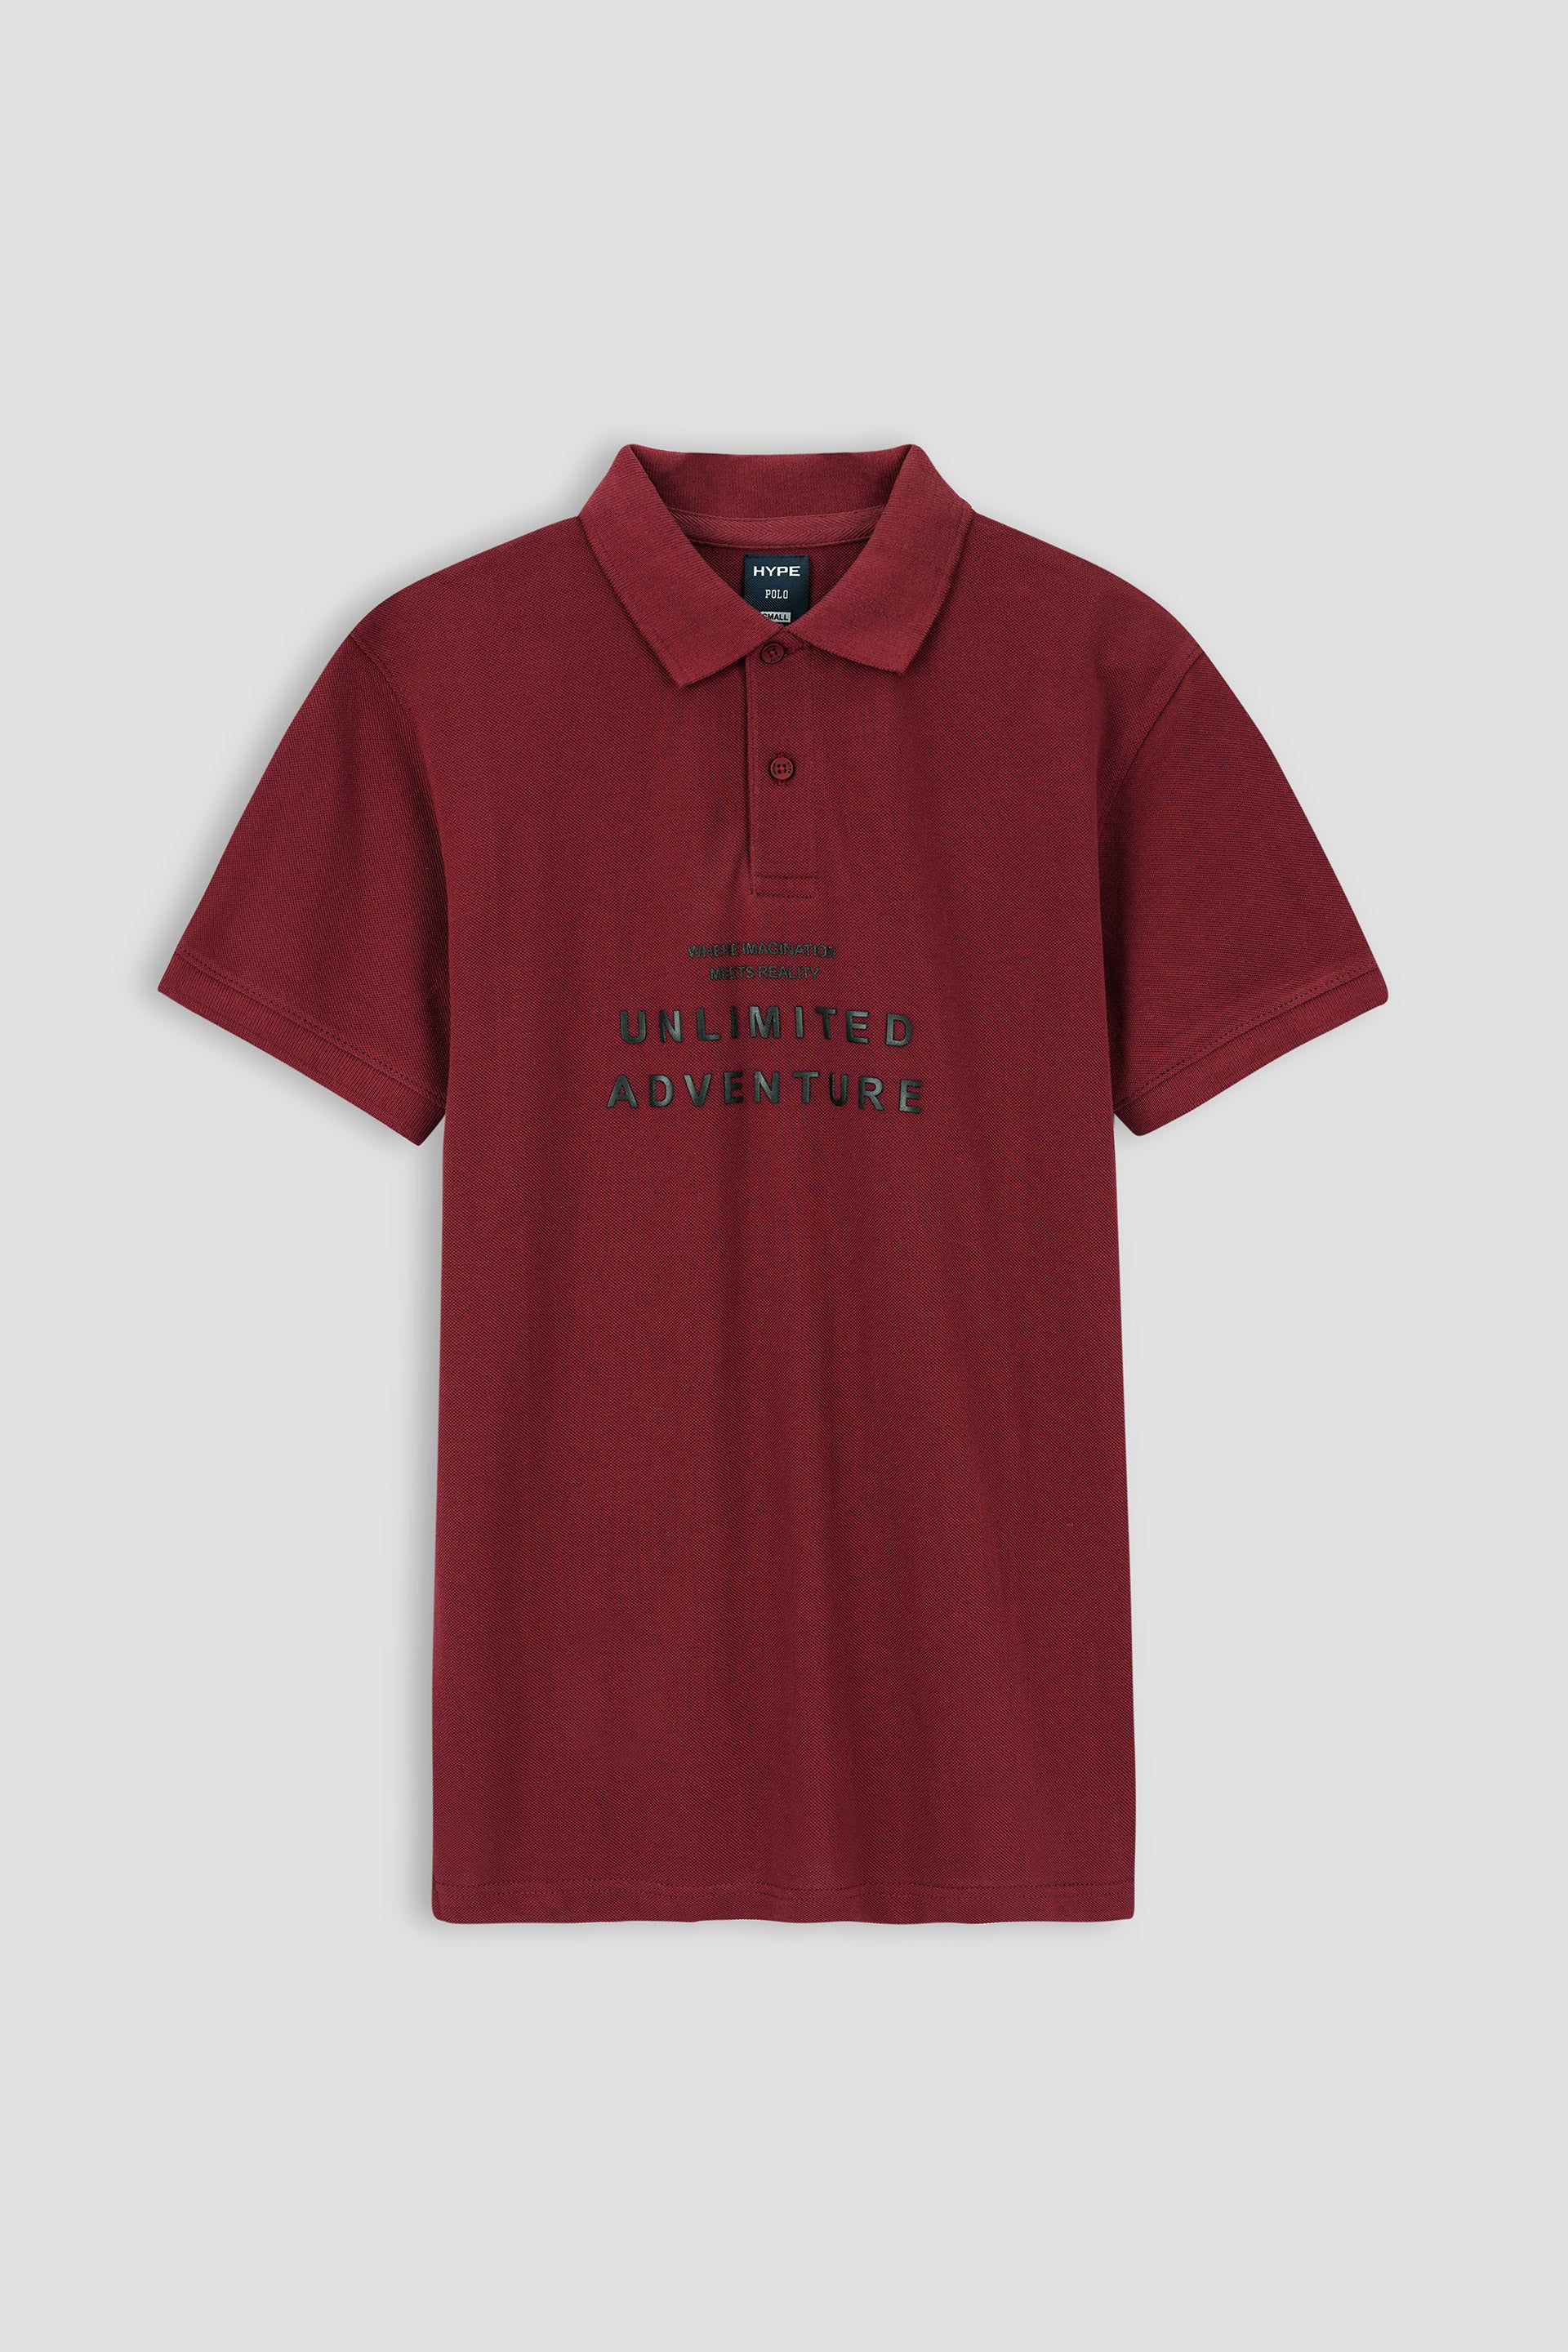 High Density Printed Maroon Pique Polo Shirt 002418